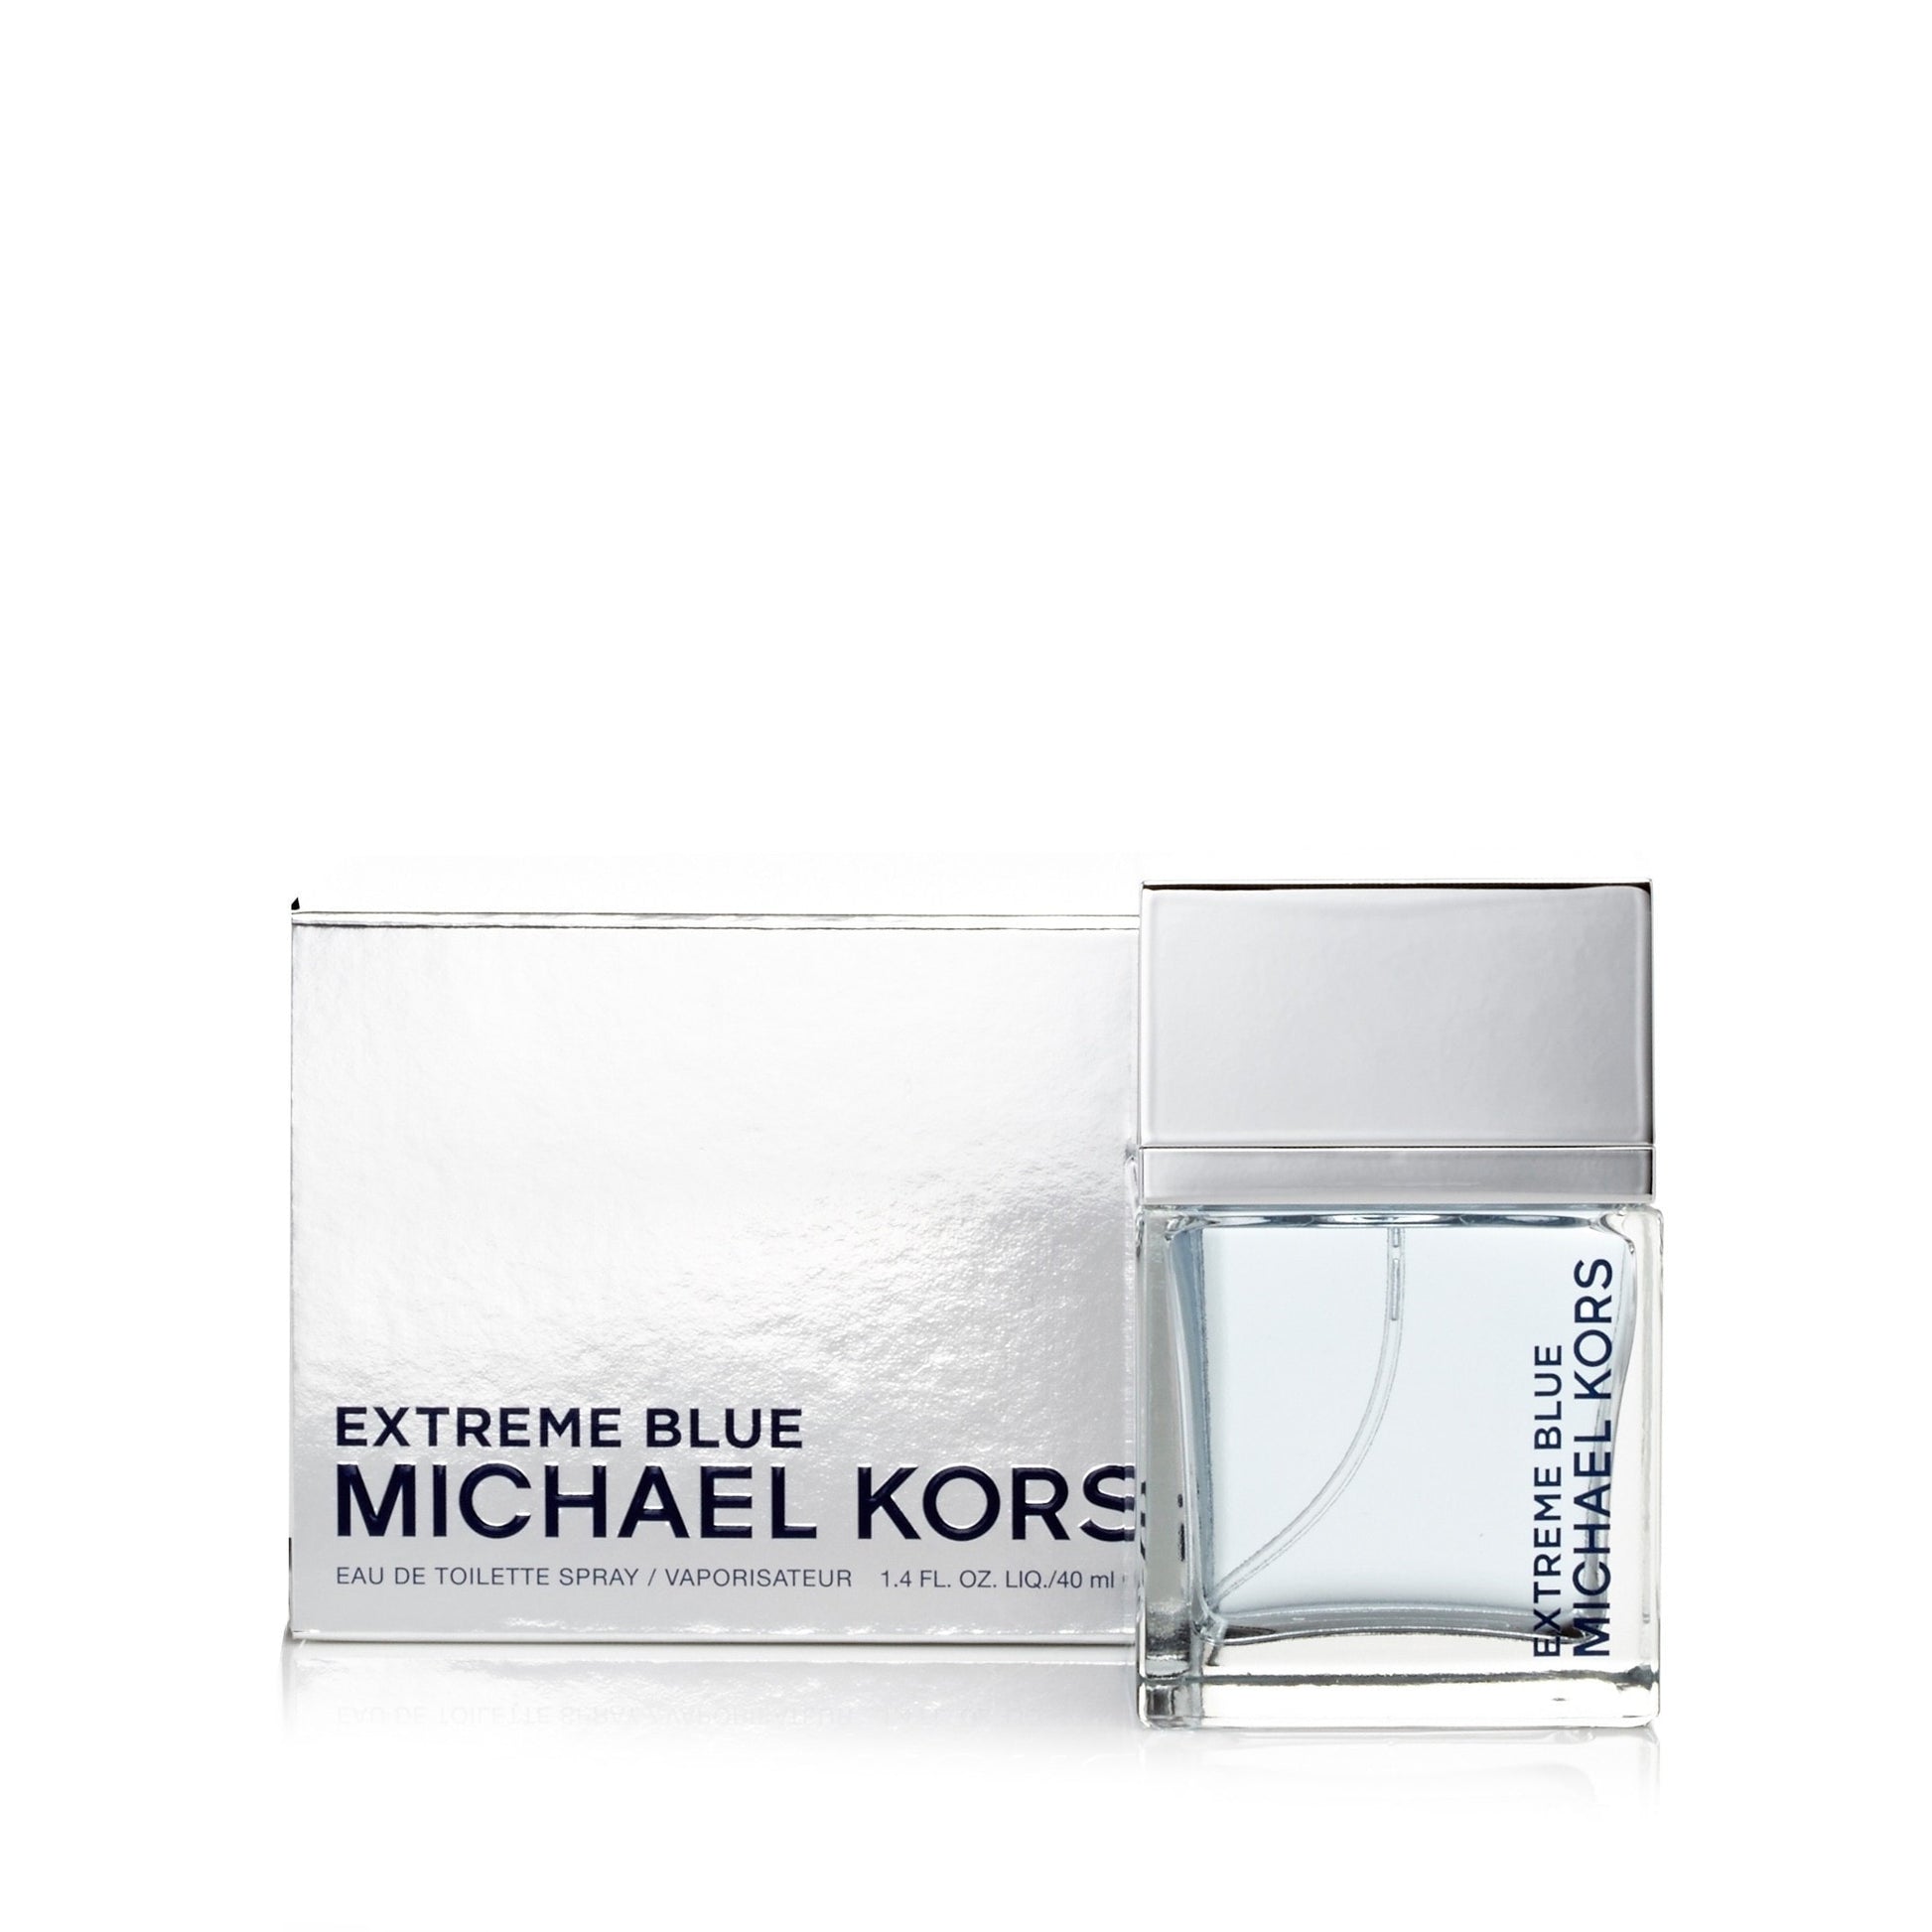 Extreme Blue Eau de Toilette Spray for Men by Michael Kors 4.0 oz. Click to open in modal